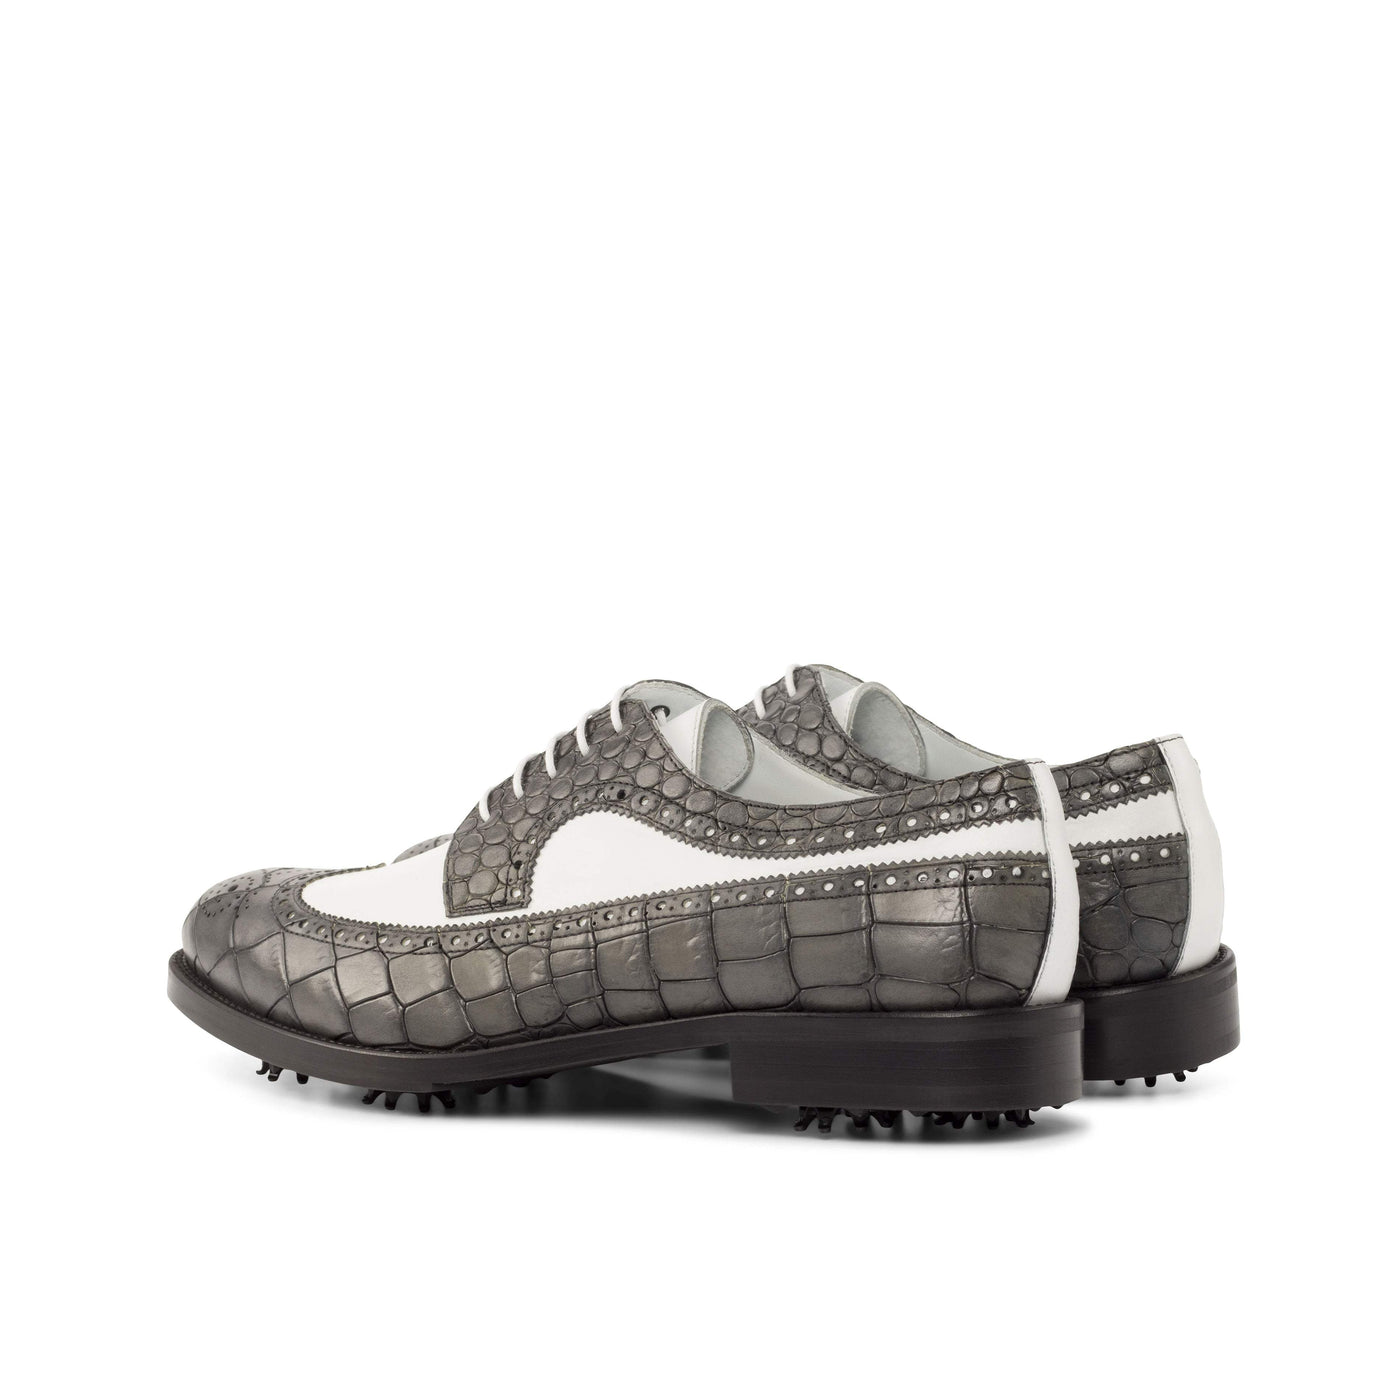 Men's Longwing Blucher Golf Shoes Leather White Grey 4751 4- MERRIMIUM